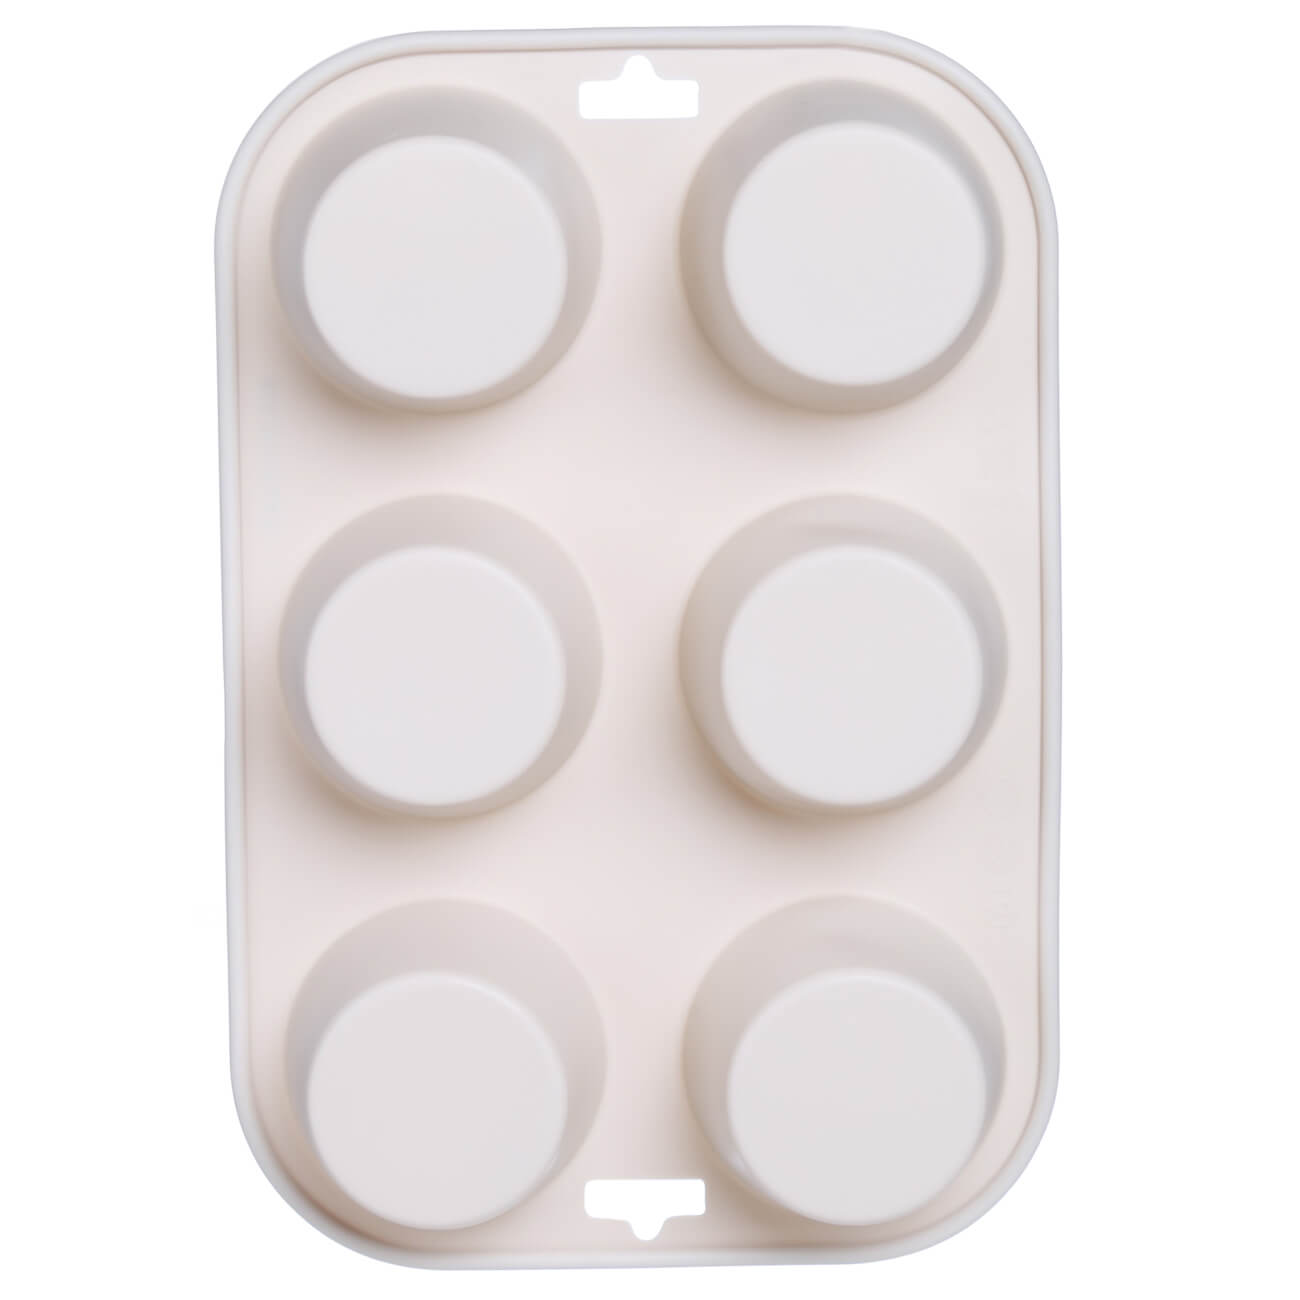 Форма для выпечки кексов, 24x16 см, 6 отд, силикон, бежевая, Bakery форма для варки яиц 20x12 см 5 отд силикон бежевая soft kitchen